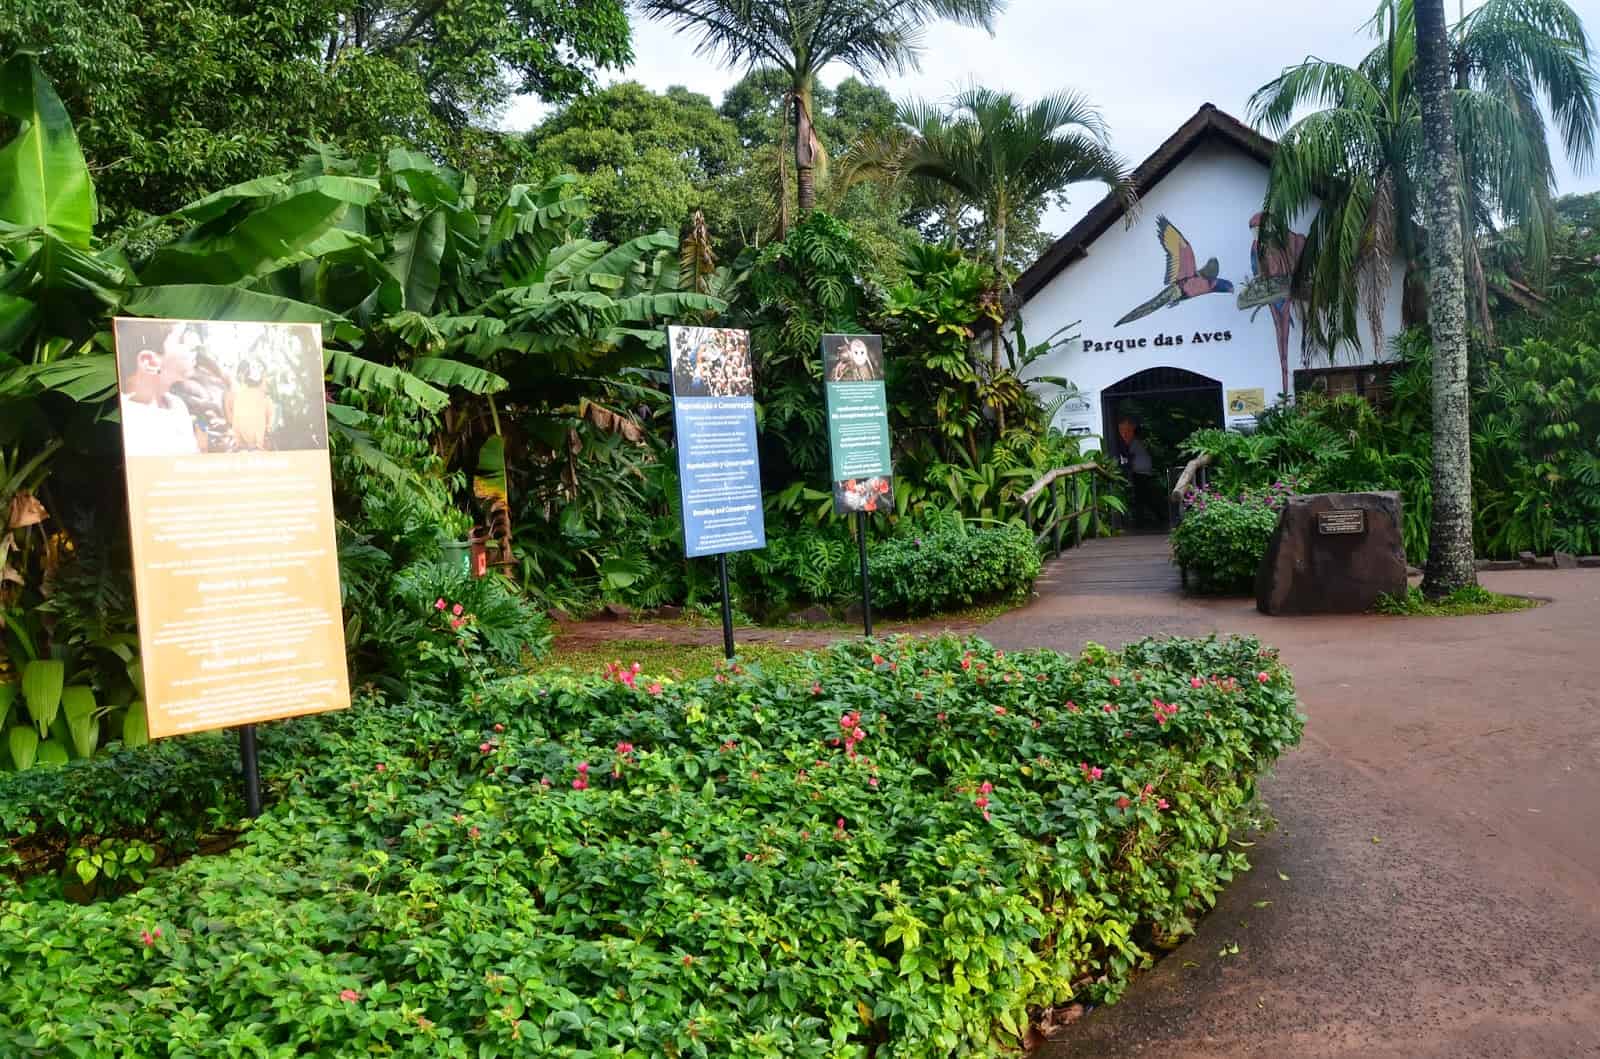 Entrance to the park at Parque das Aves in Foz do Iguaçu, Brazil